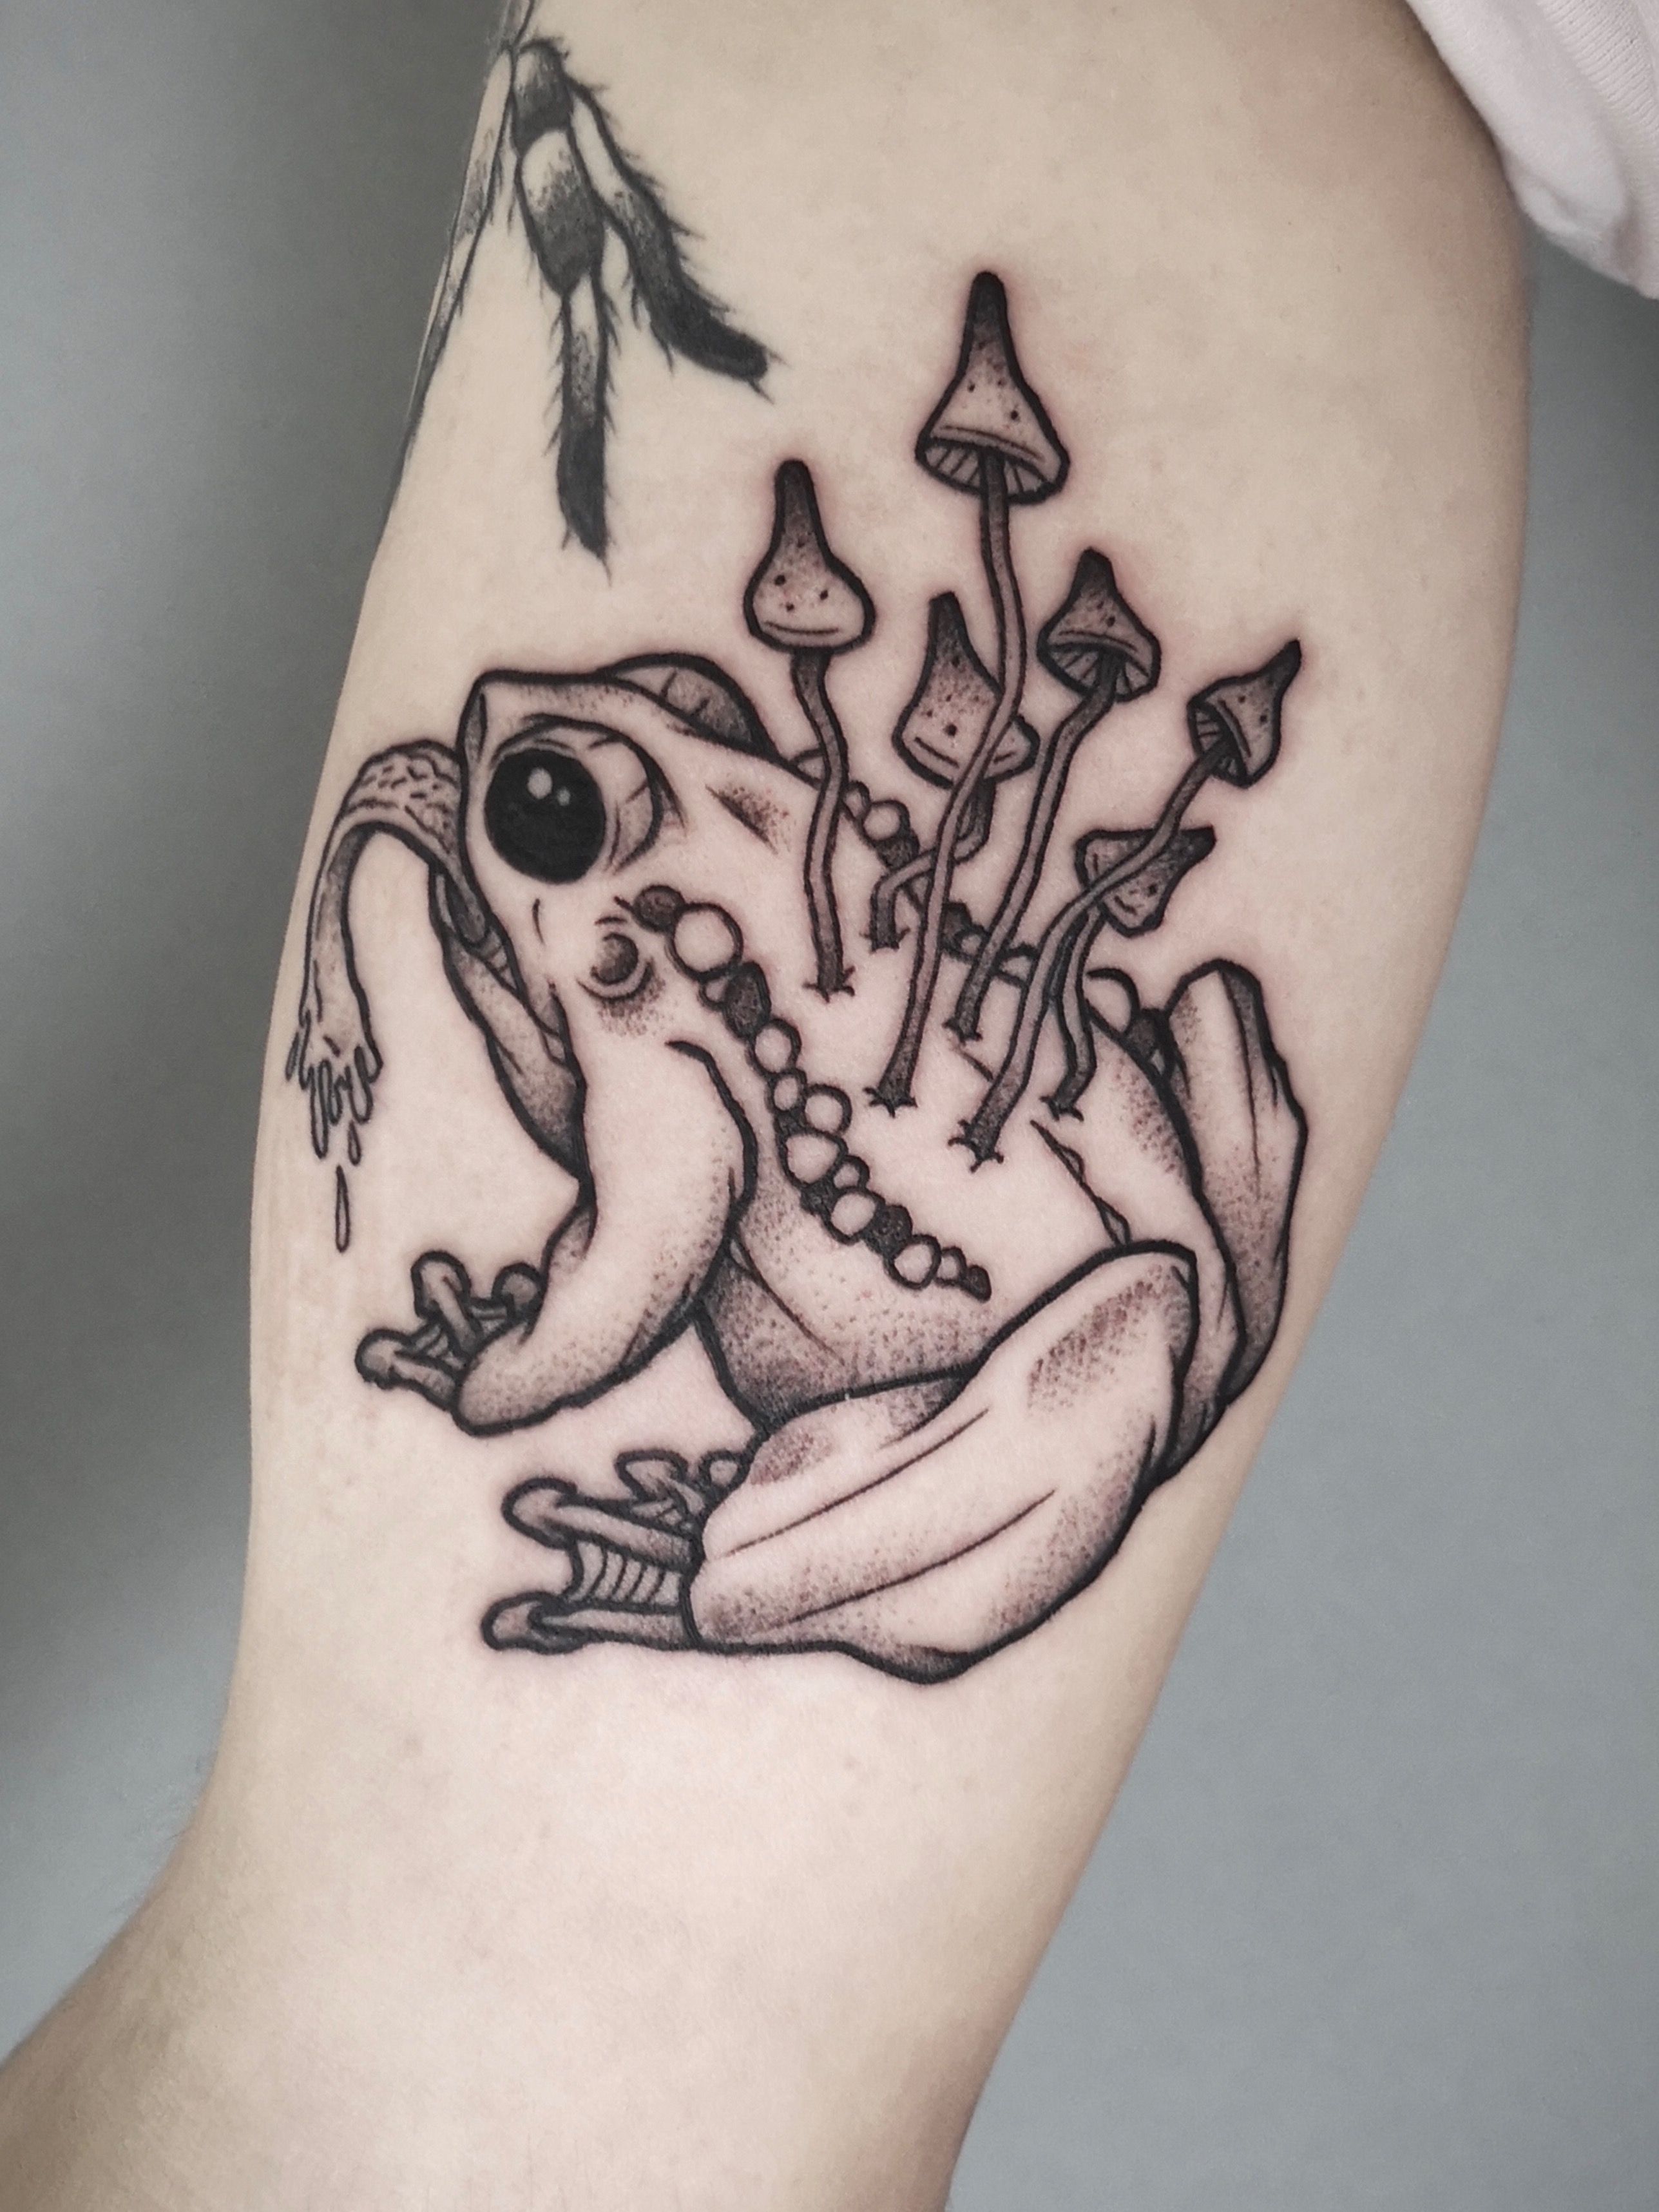 12 Tiny Frog Tattoo Ideas To Inspire You  alexie